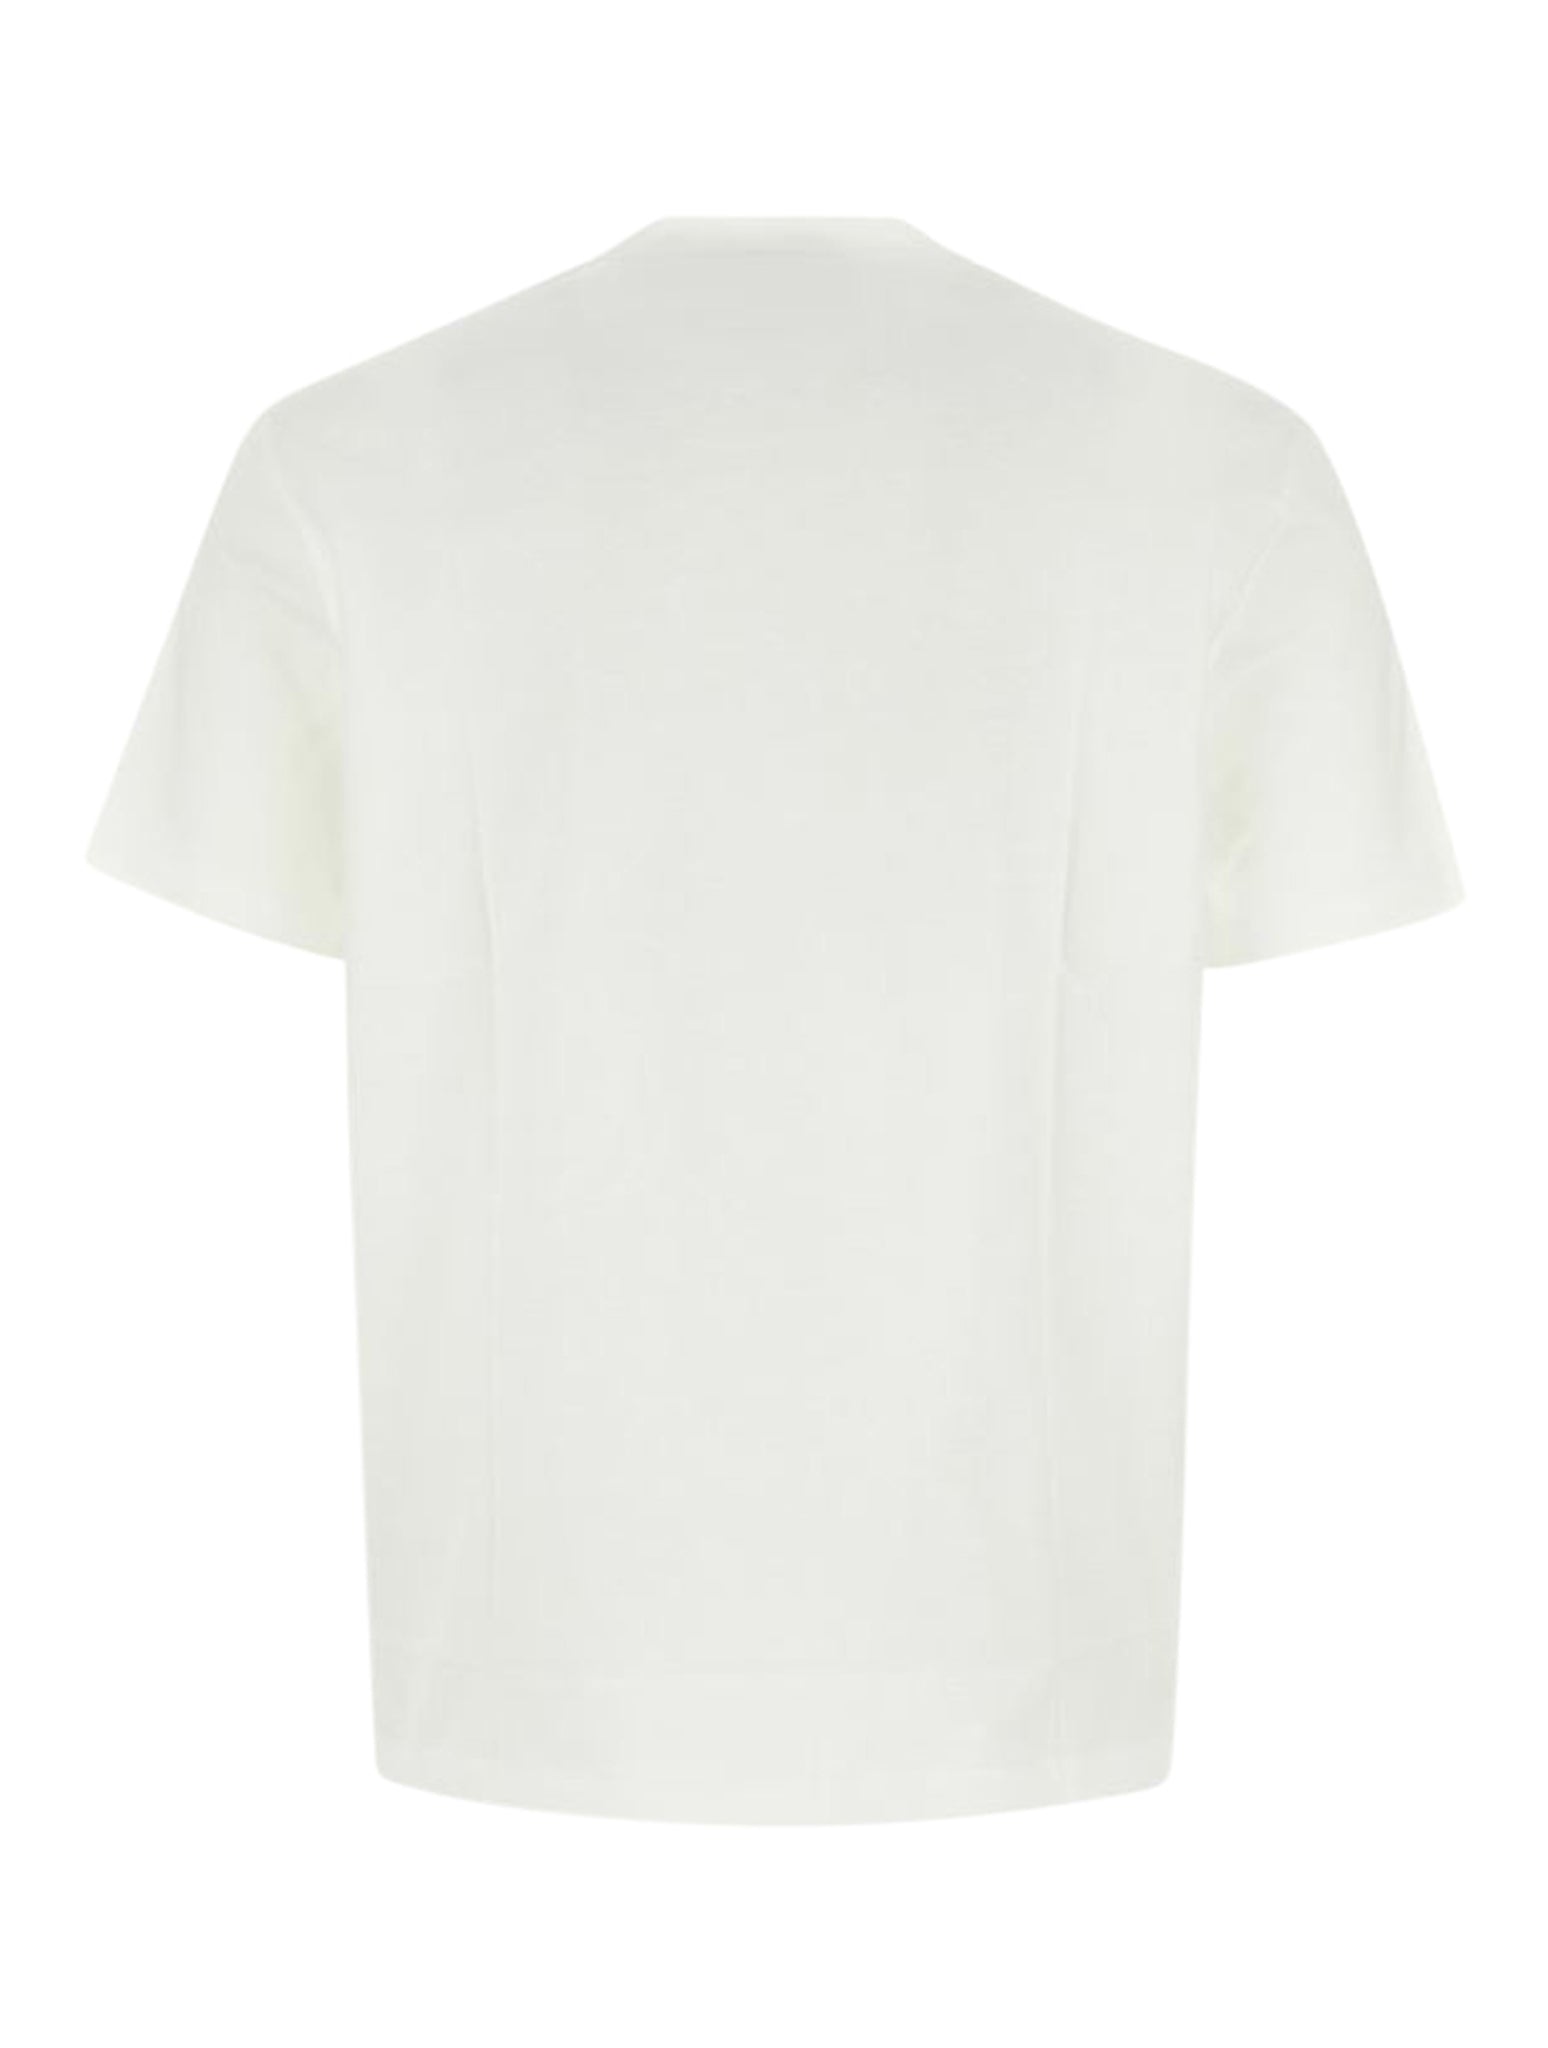 t-shirt compact cotton